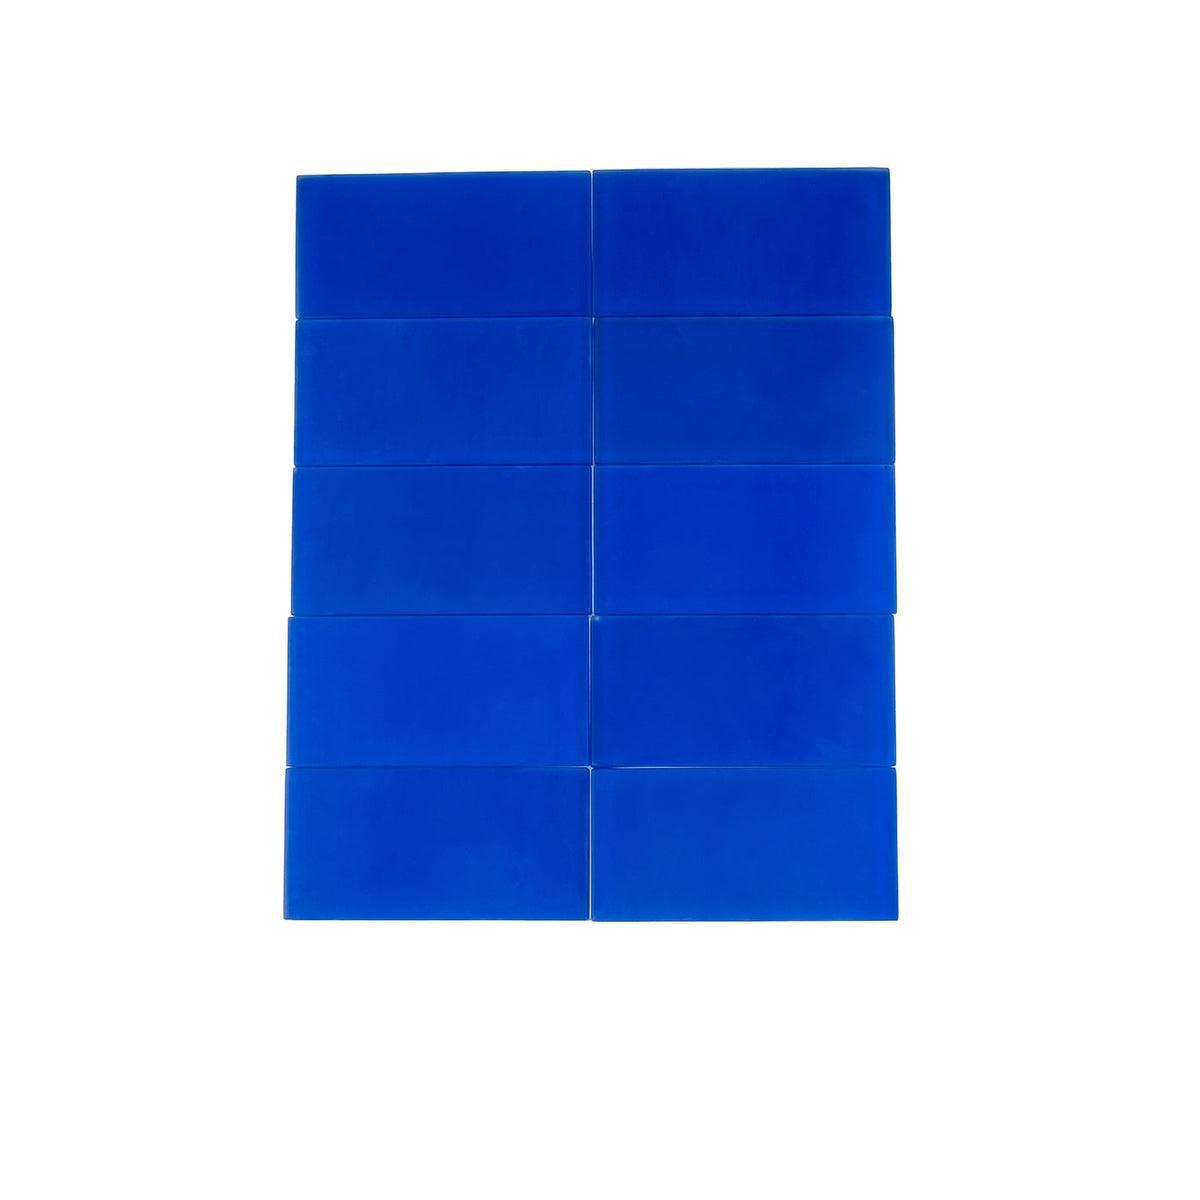 Glacier Cobalt Blue 3X6 Frosted Glass Subway Tile